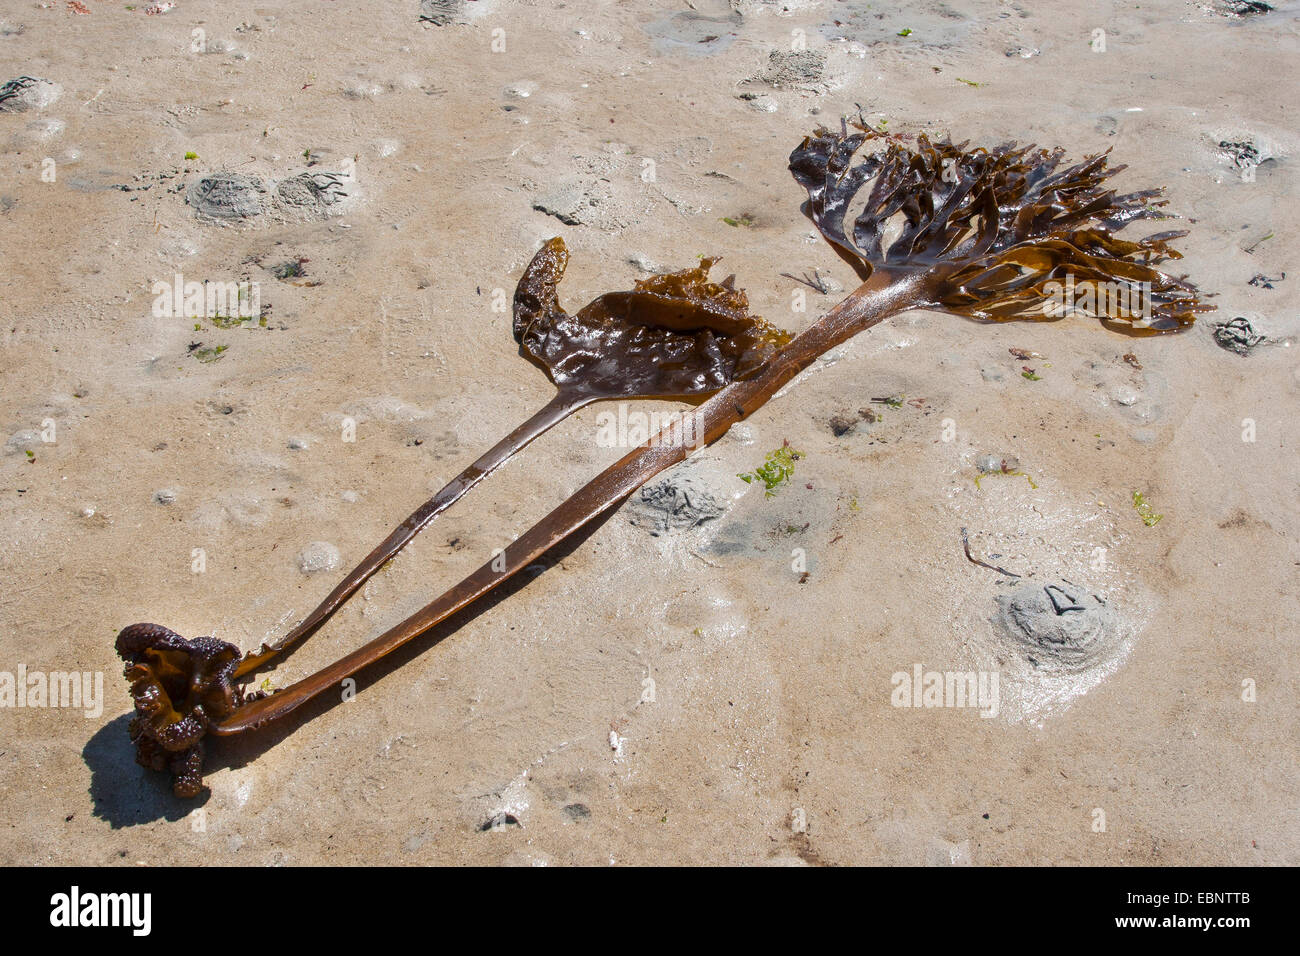 Furbellow (Saccorhiza polyschides, Saccorhiza bulbosa), with rhizoid washed up on the beach, Germany Stock Photo